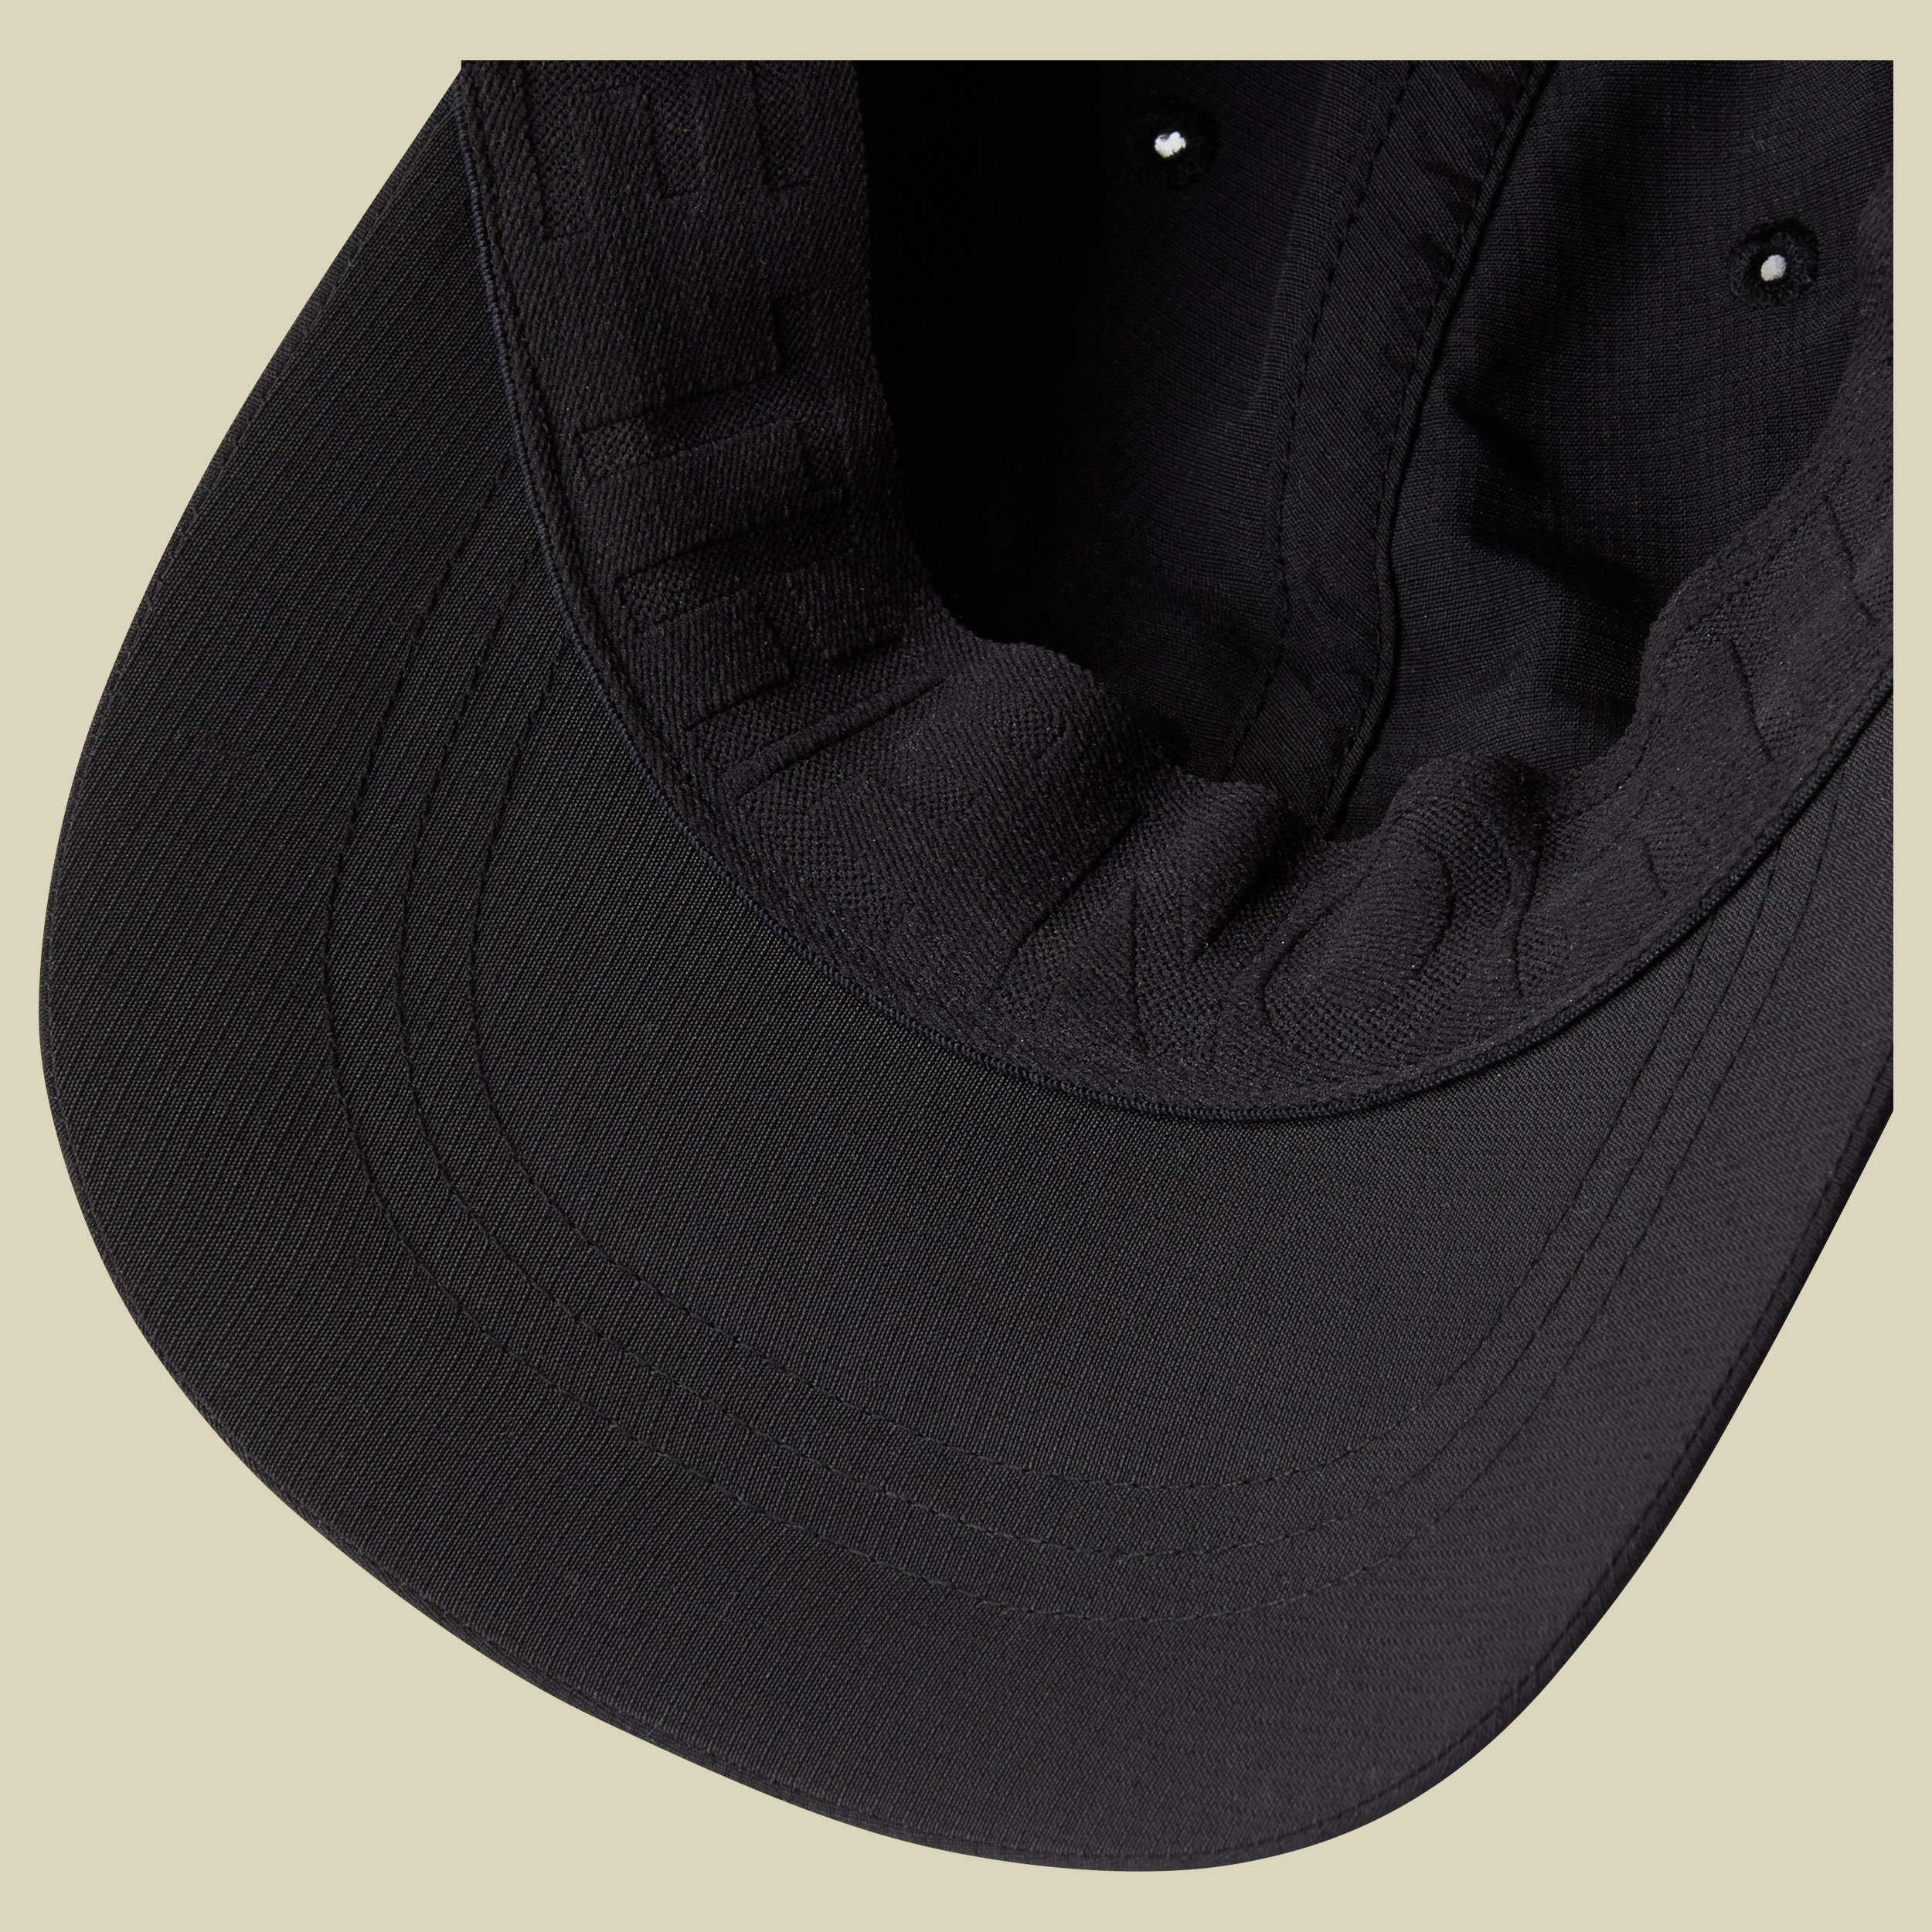 Horizon Hat one size schwarz - TNF black